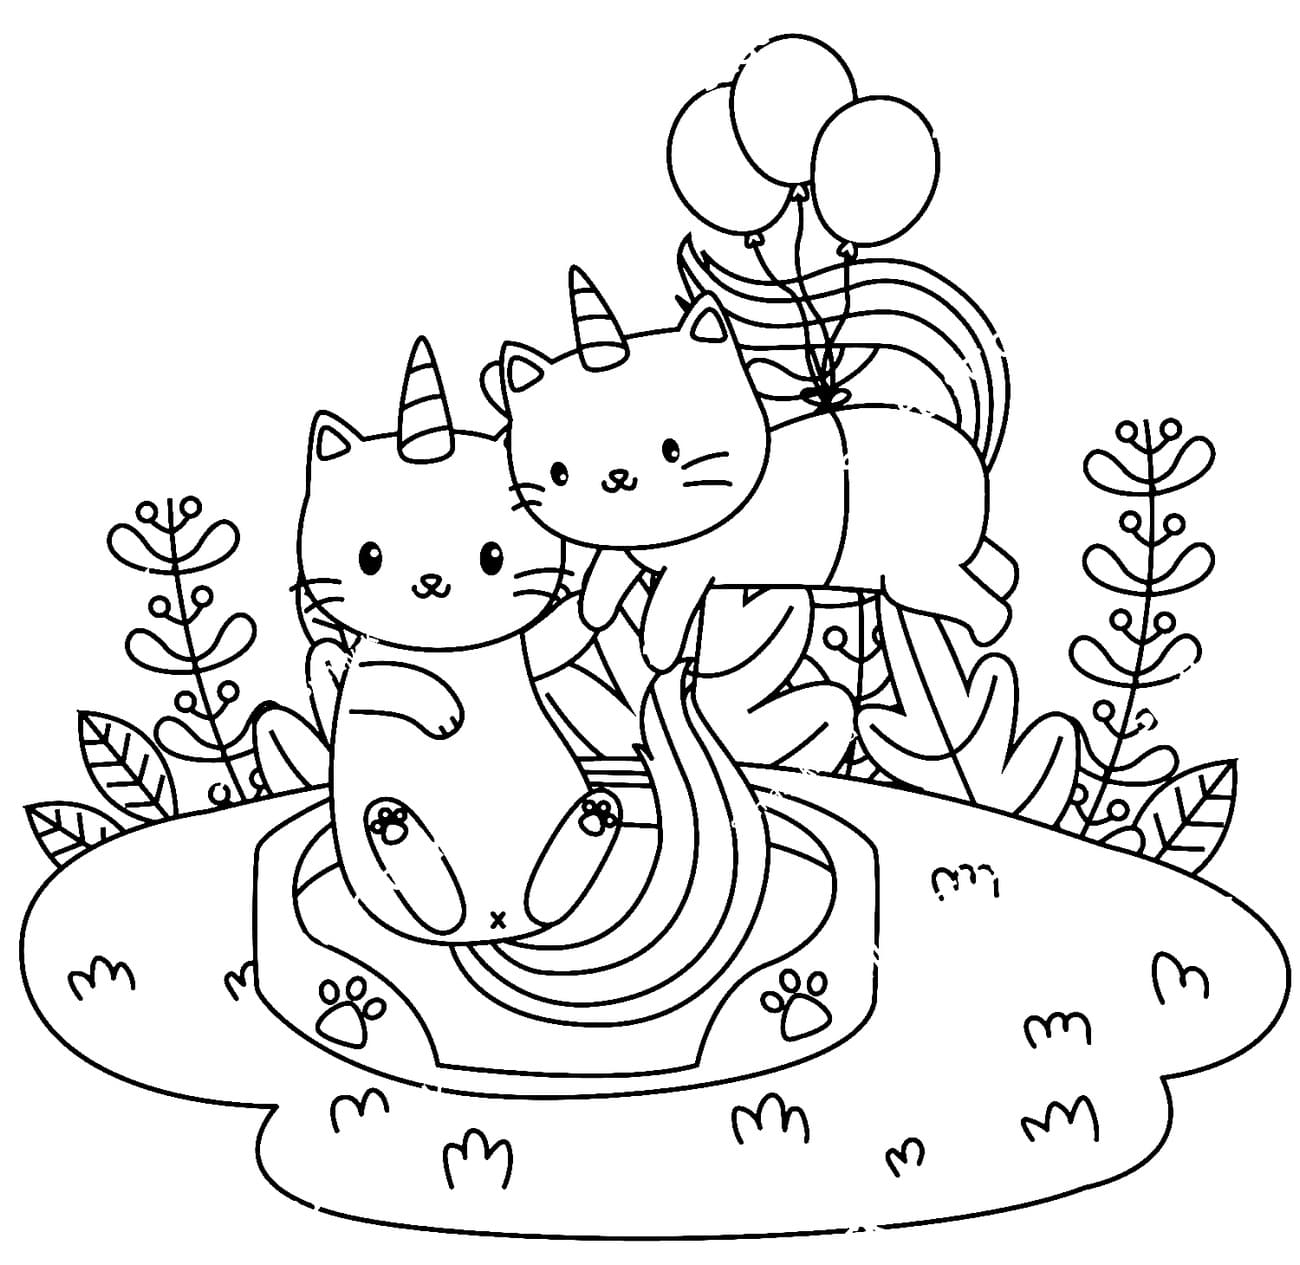 65 Desenhos para colorir kawaii e imprimir  Pusheen coloring pages, Cat  coloring page, Mermaid coloring pages